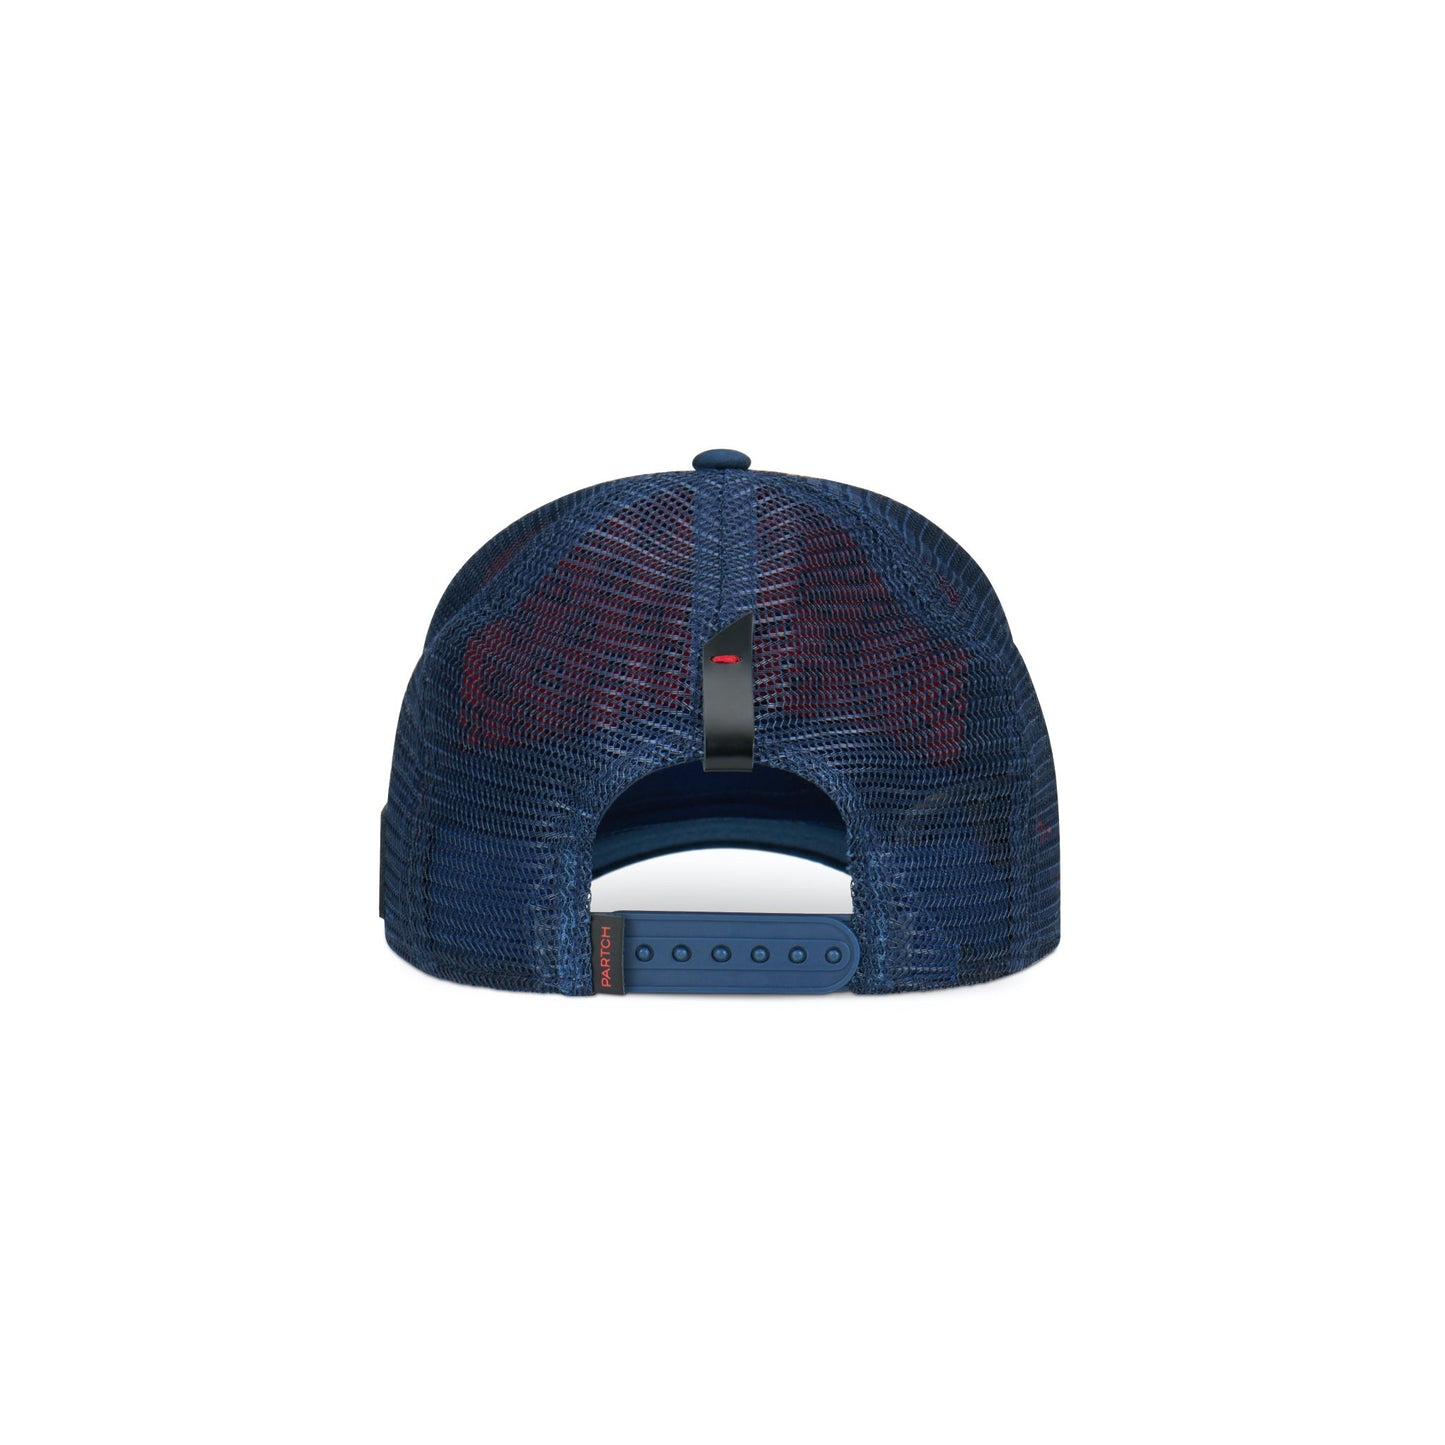 Partch Trucker Hat Navy Blue with PARTCH-Clip Exsyt Back View